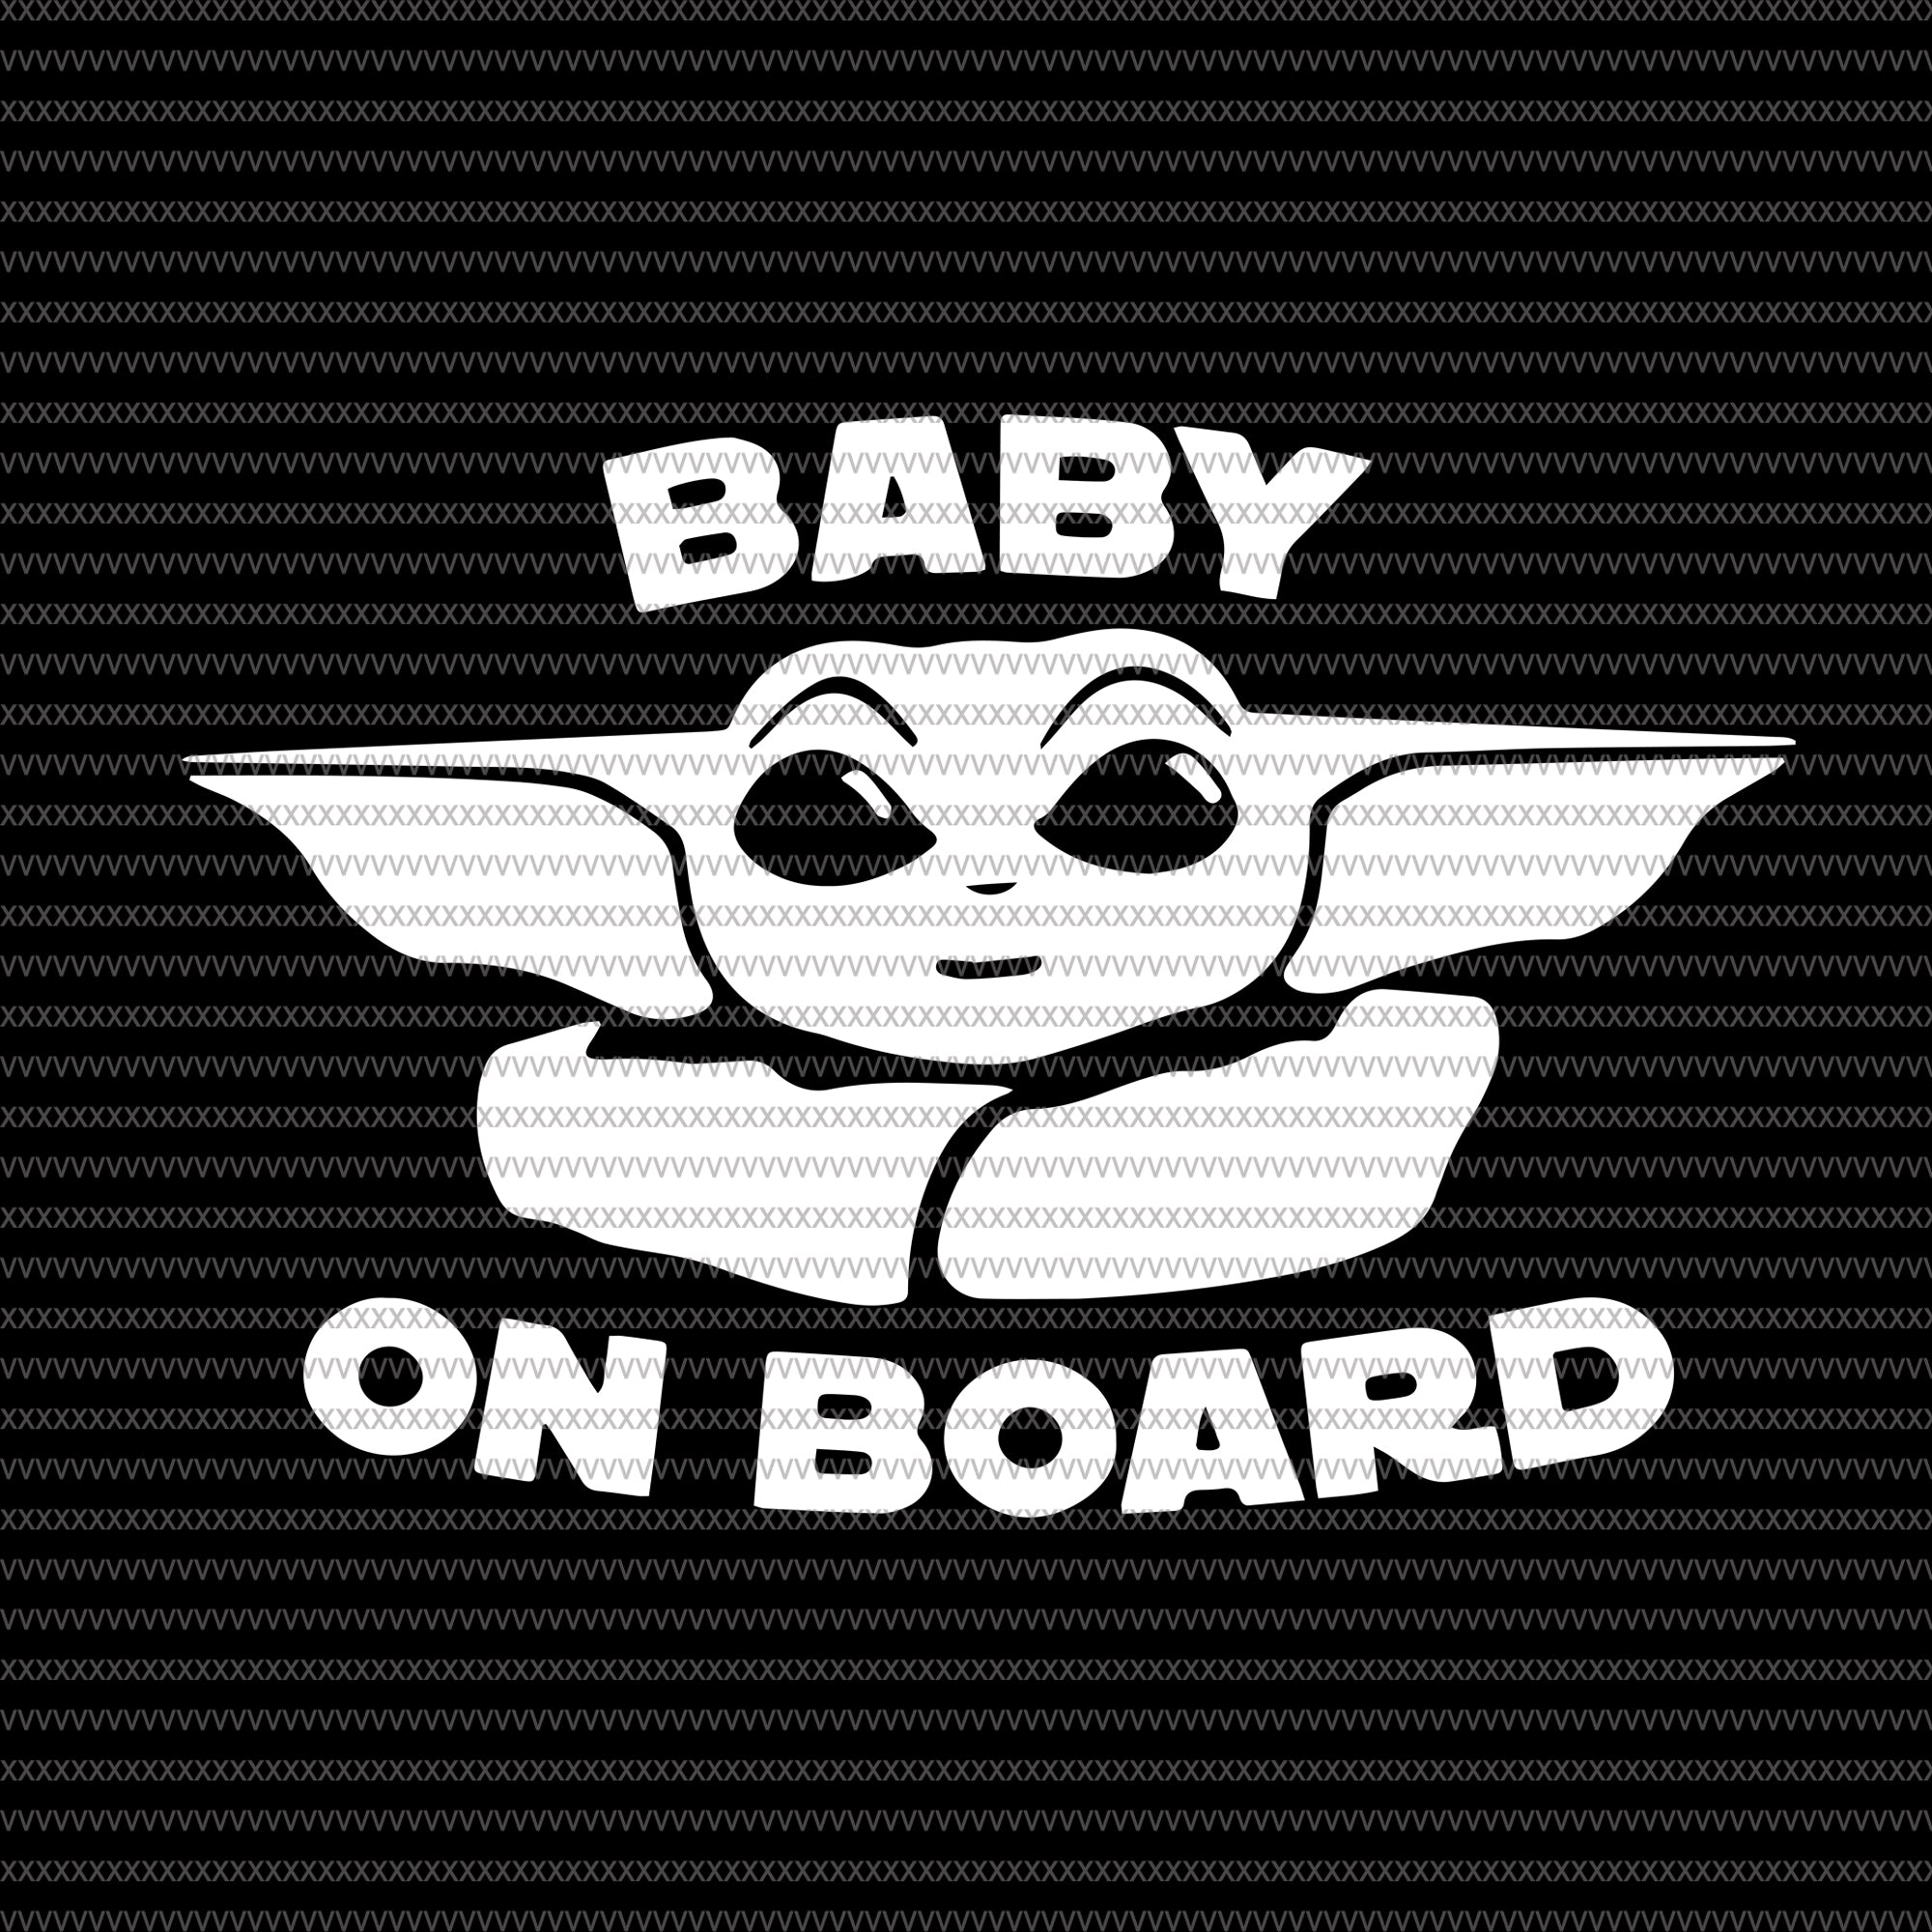 Baby on board, Baby yoda svg, baby yoda vector, baby yoda digital file, star wars svg, star wars vector, The Mandalorian the child svg